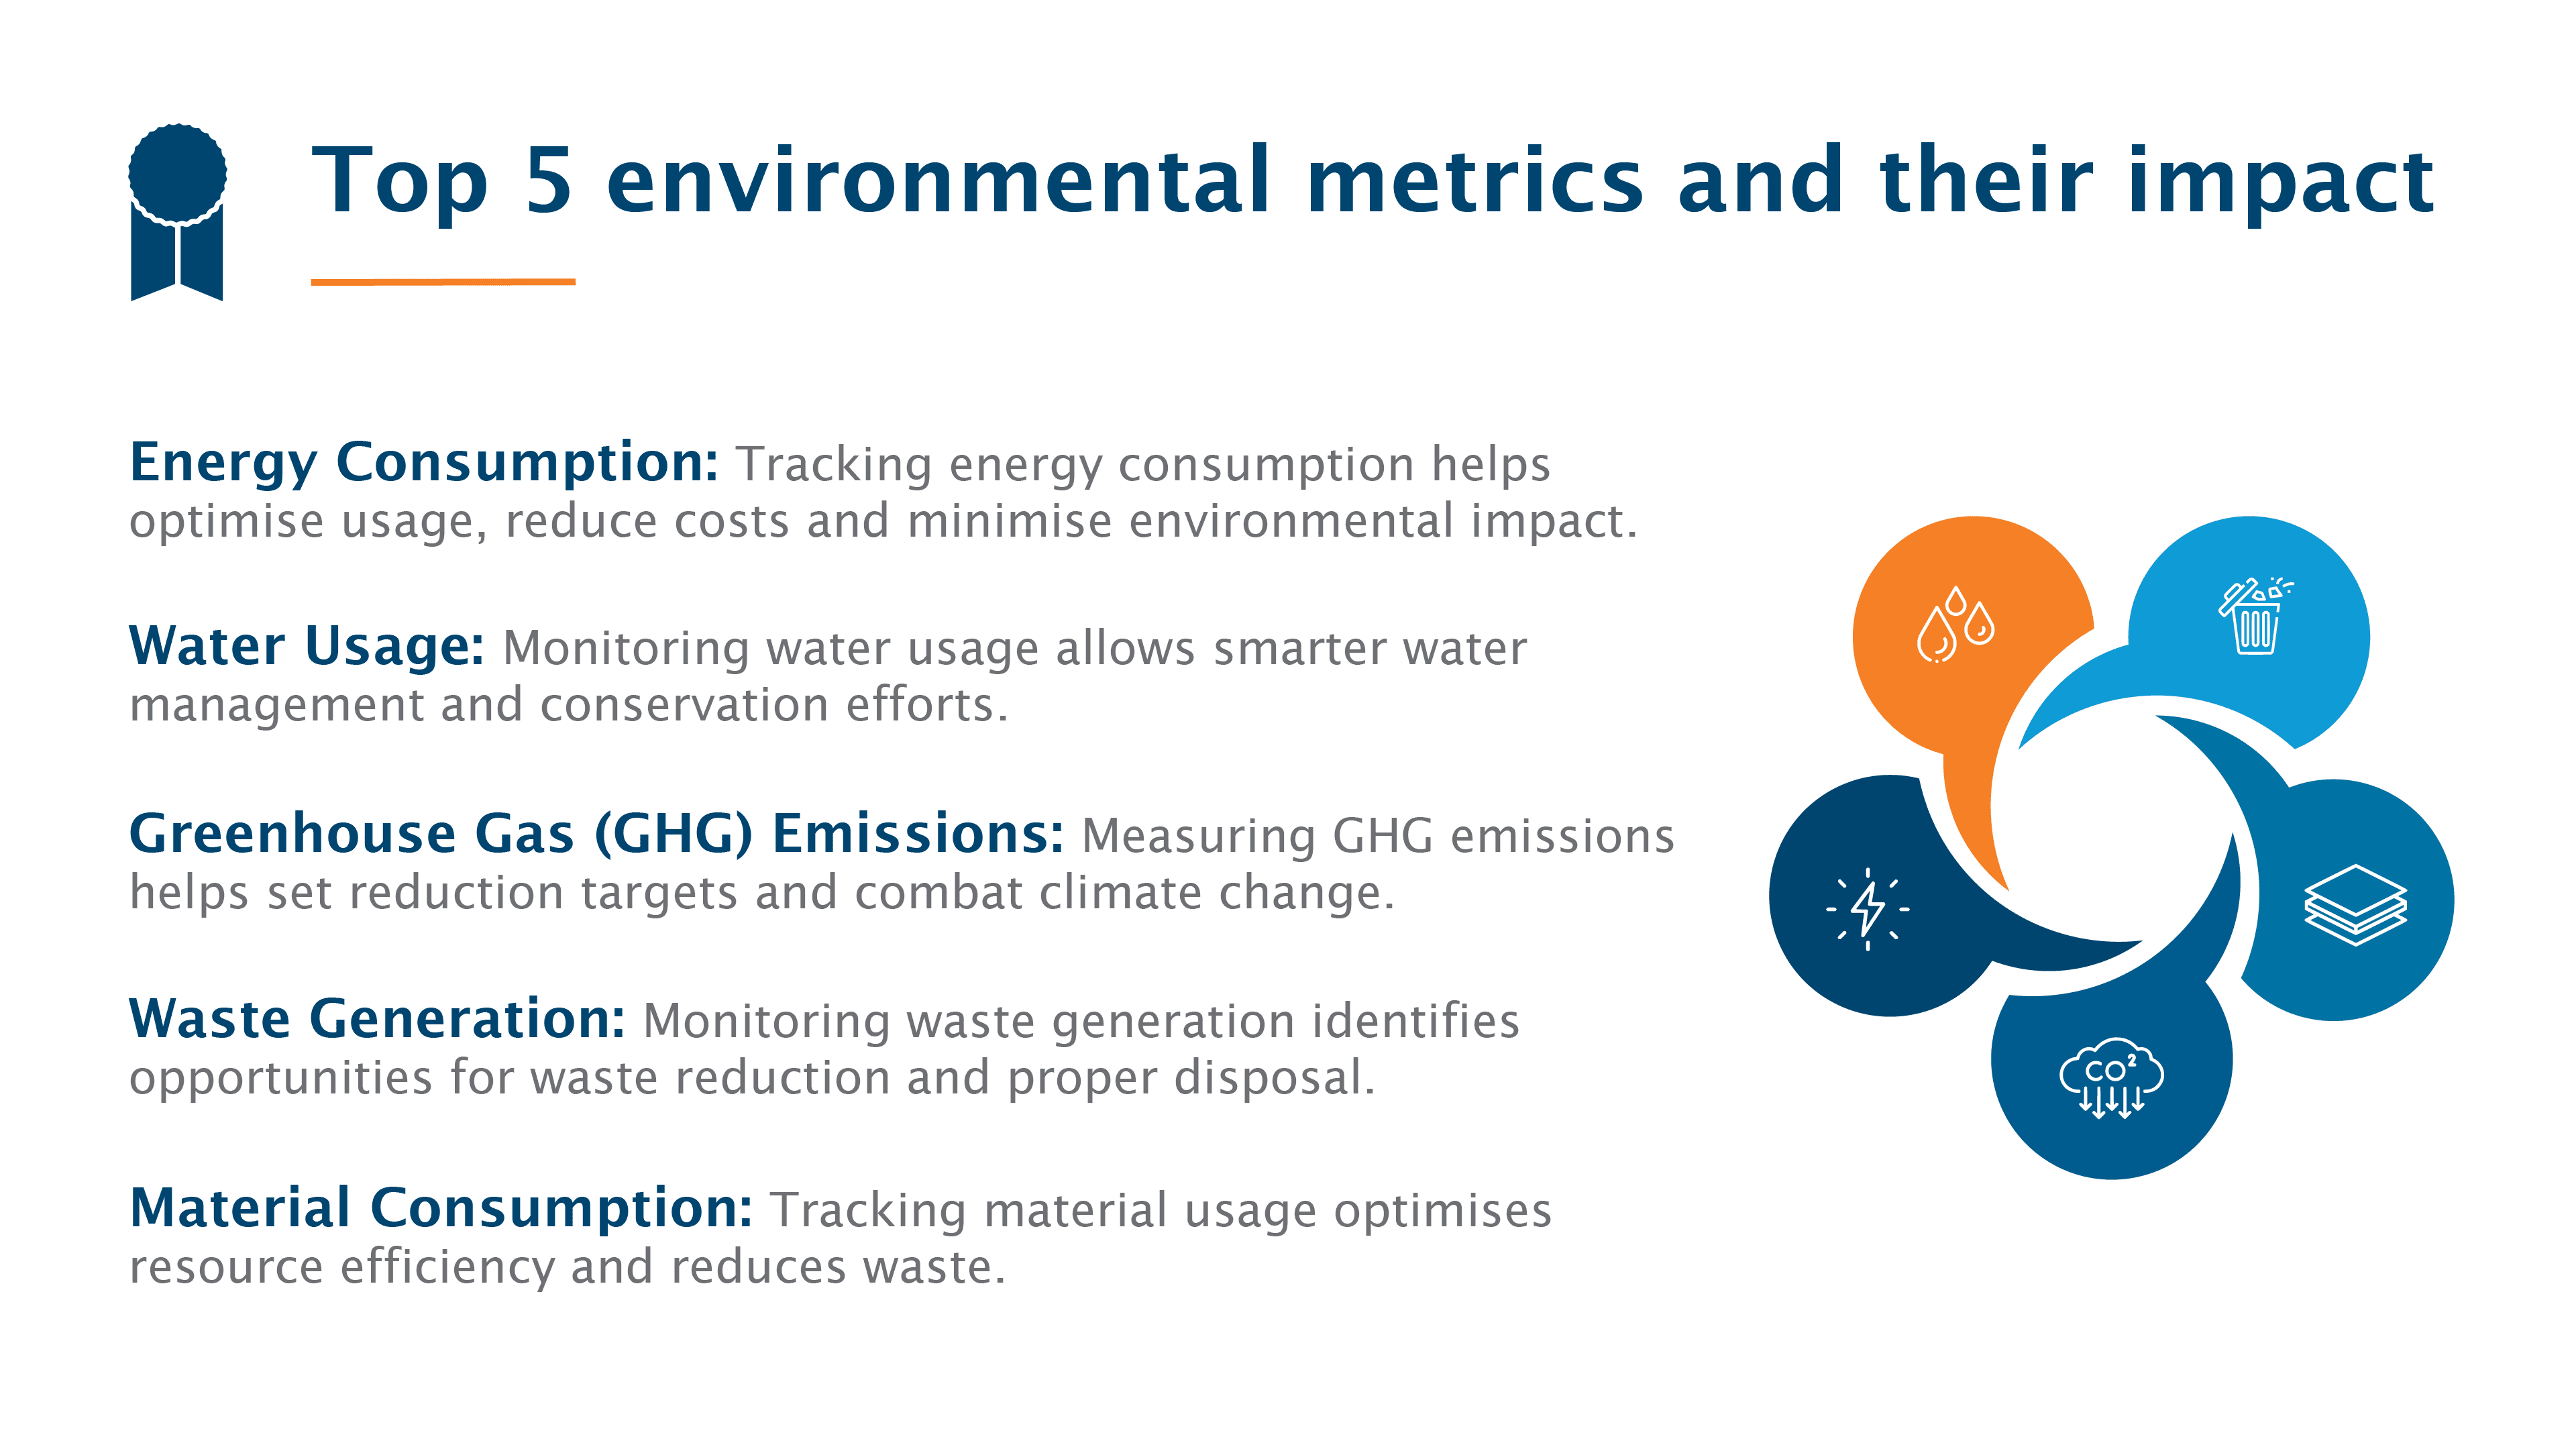 Top 5 environmental metrics and their impact